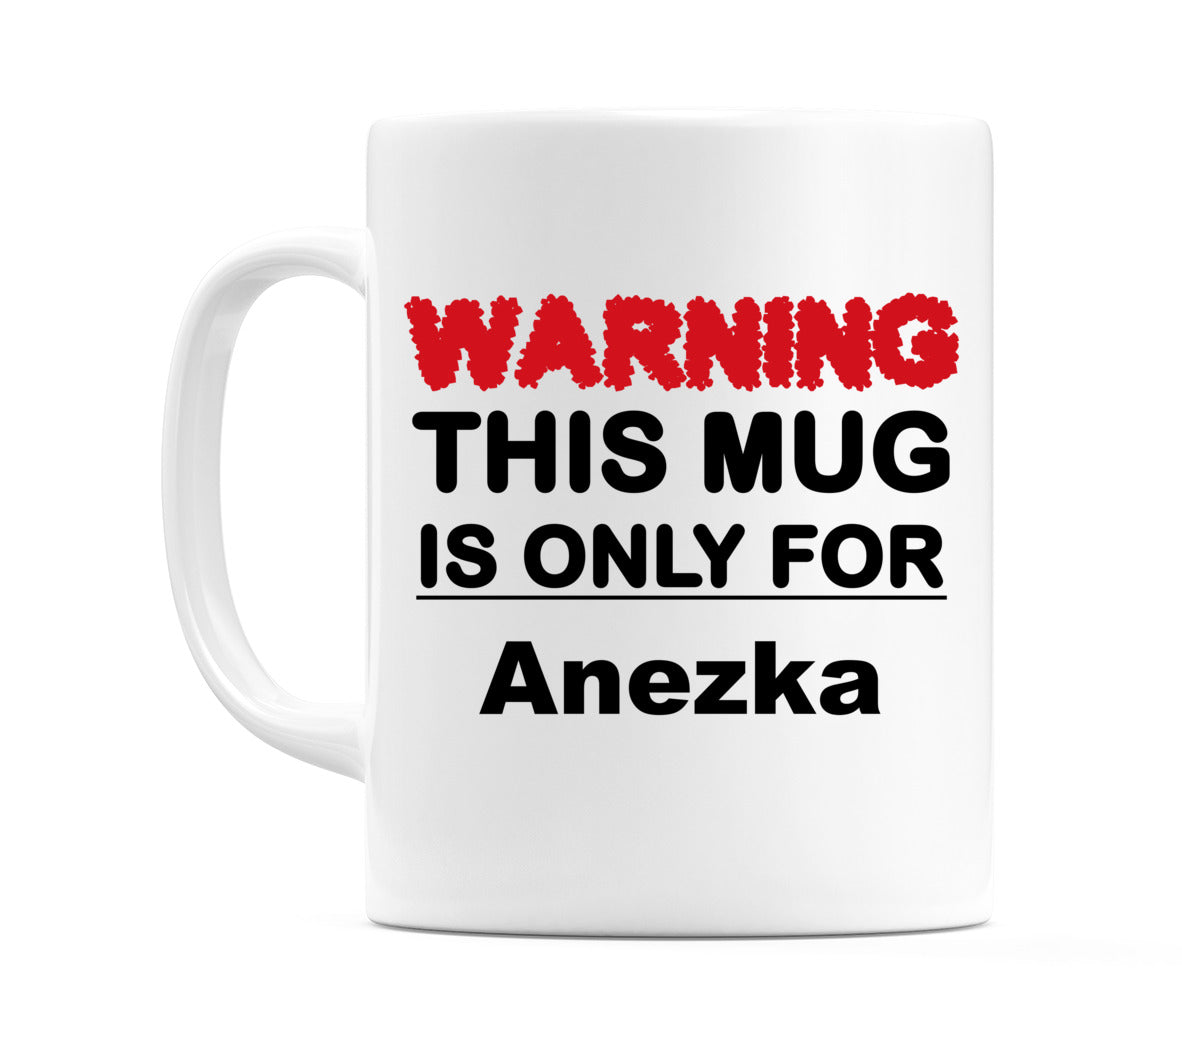 Warning This Mug is ONLY for Anezka Mug